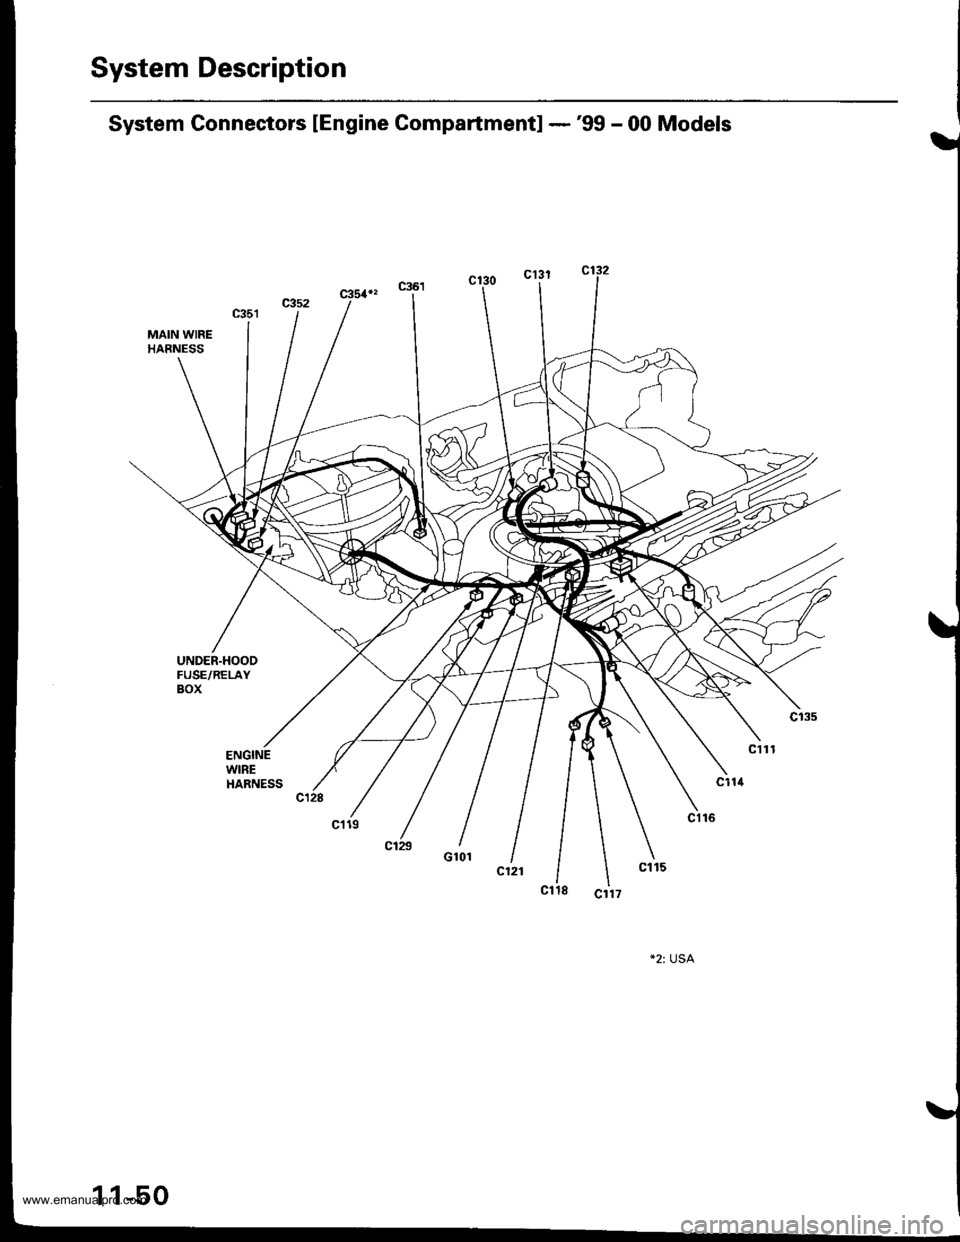 HONDA CR-V 1999 RD1-RD3 / 1.G Workshop Manual 
System Description
System Gonnectors lEngine Compartment] -99 - 00 Models
MAIN WIREHAENESS
UNDER.HOOOFUSE/RELAYBOX
ENGINEWIREHARNESS
www.emanualpro.com  